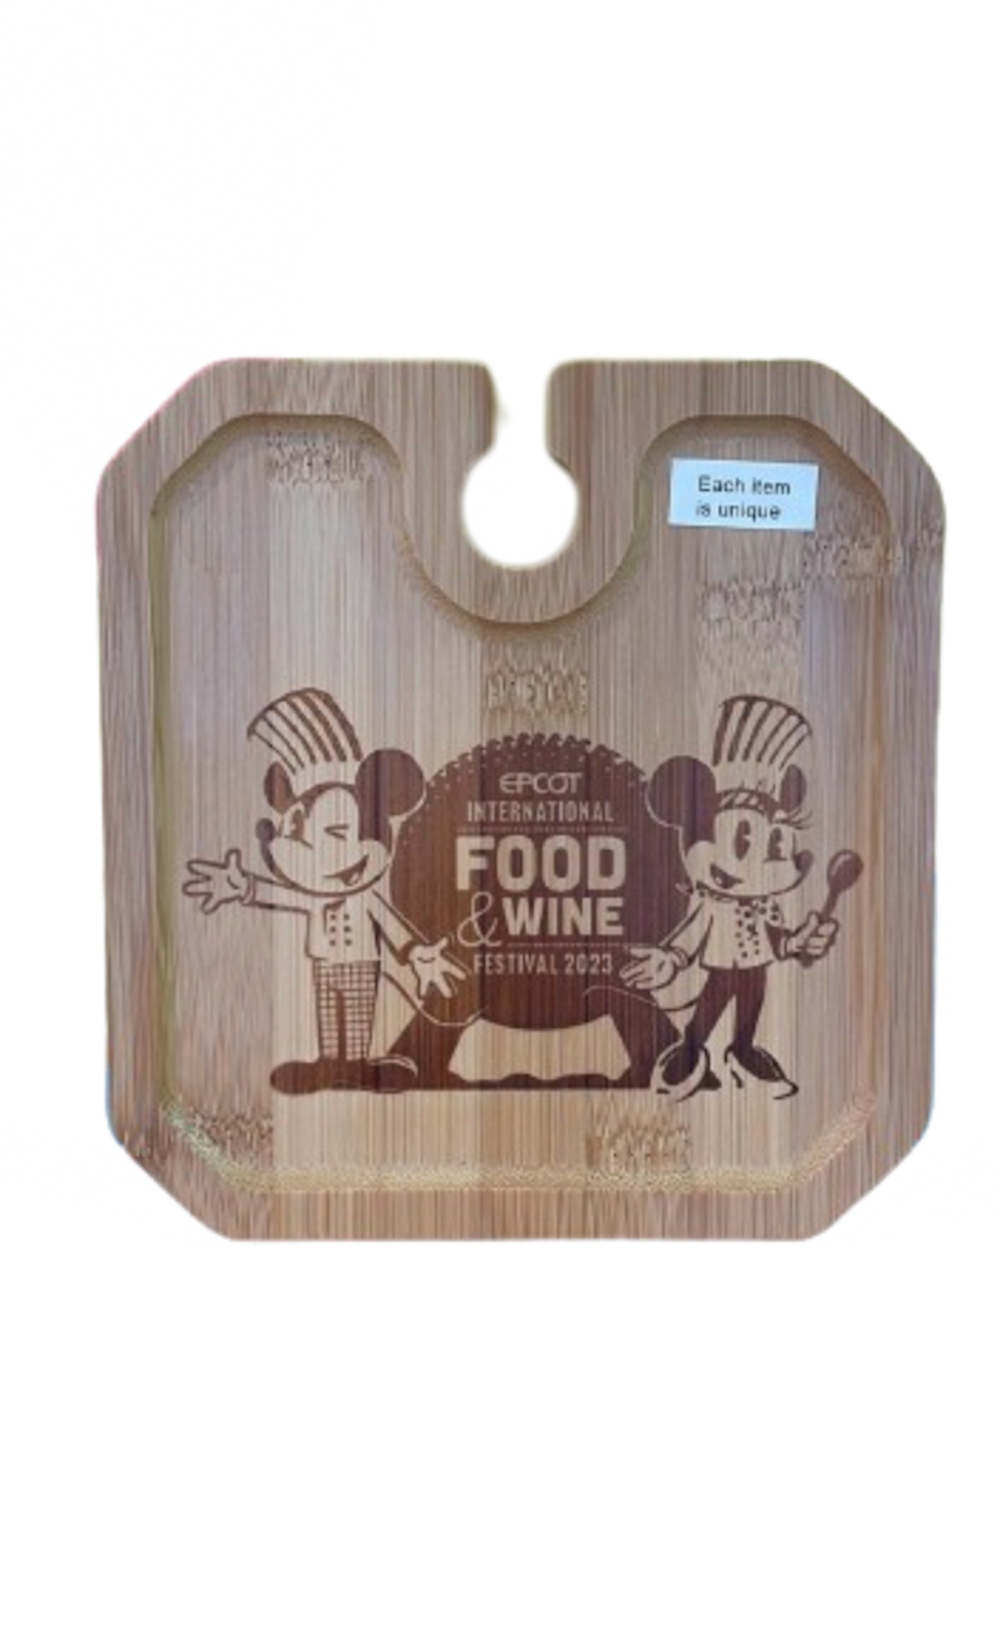 Disney Tupperware Box - 2023 Epcot Food and Wine Festival